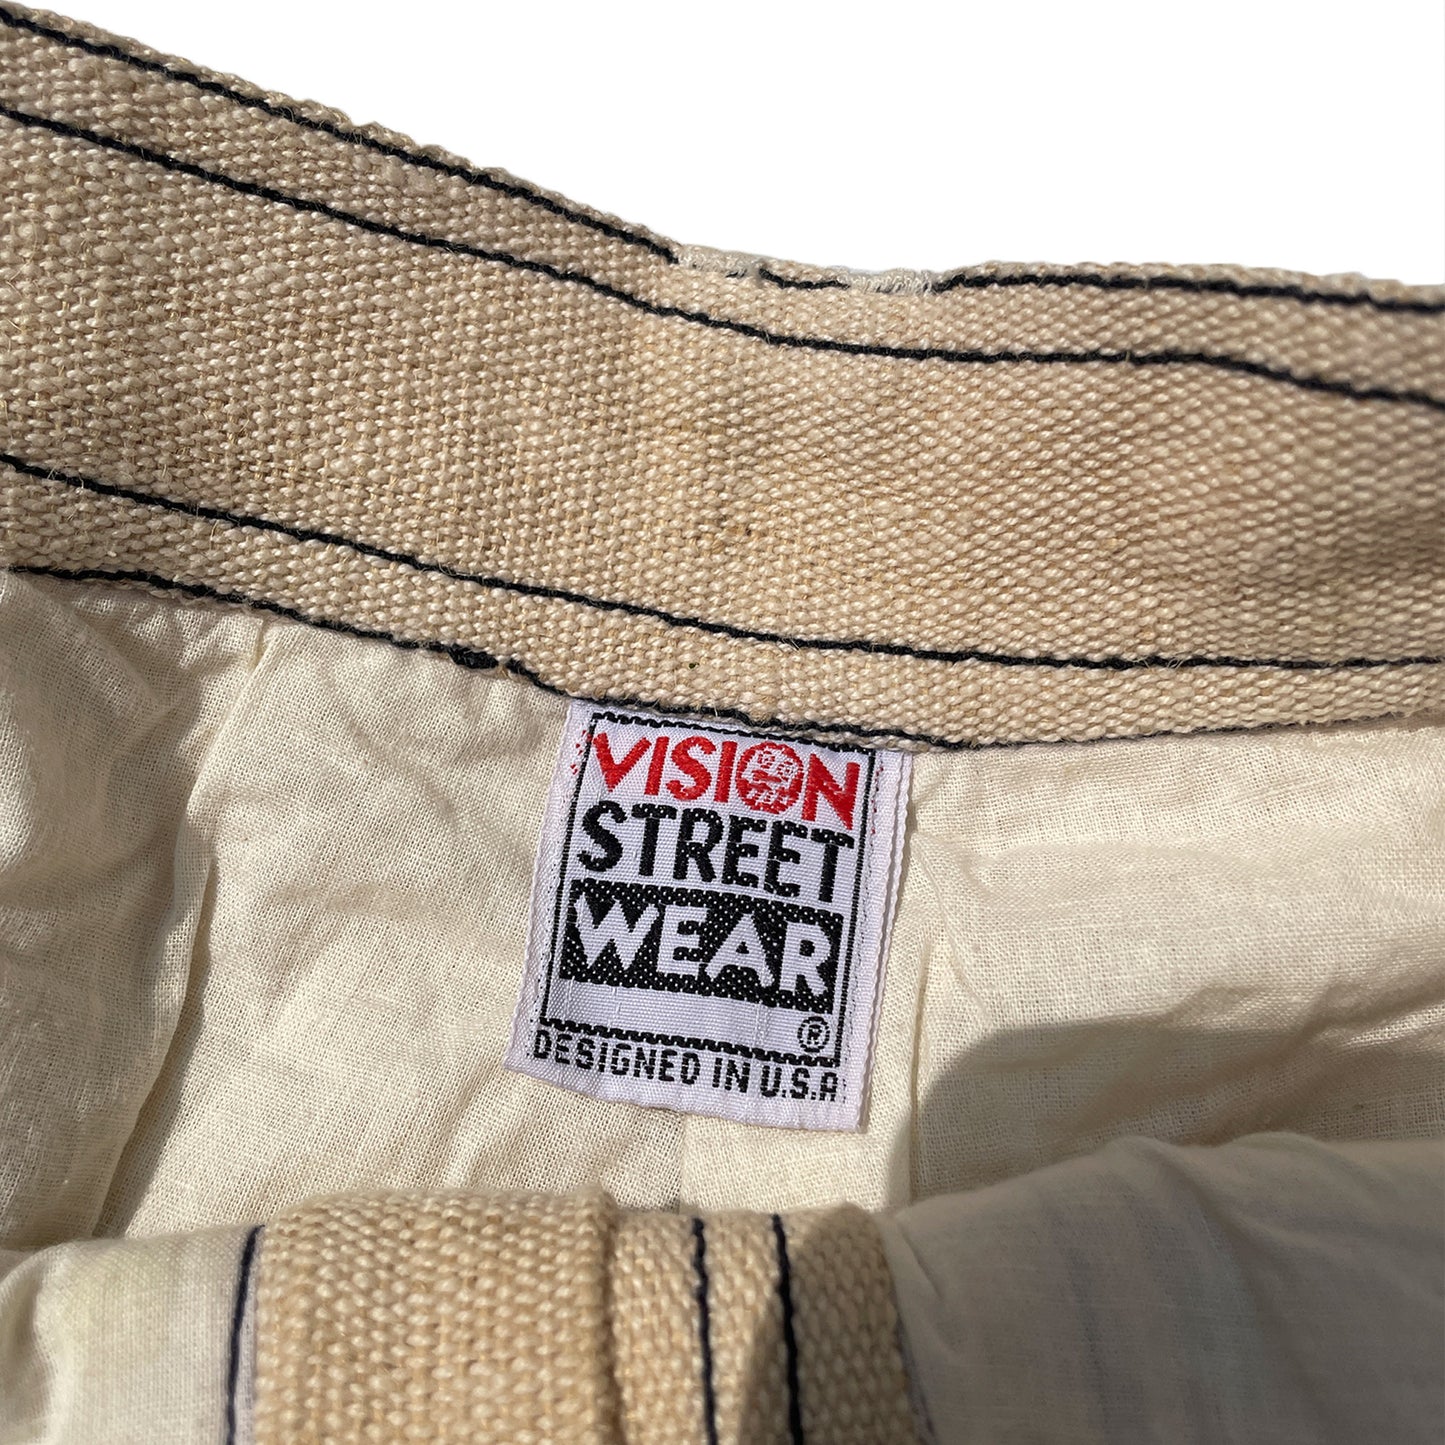 Vision Street Wear Cargo Shorts (Sandstone) VINTAGE 90s